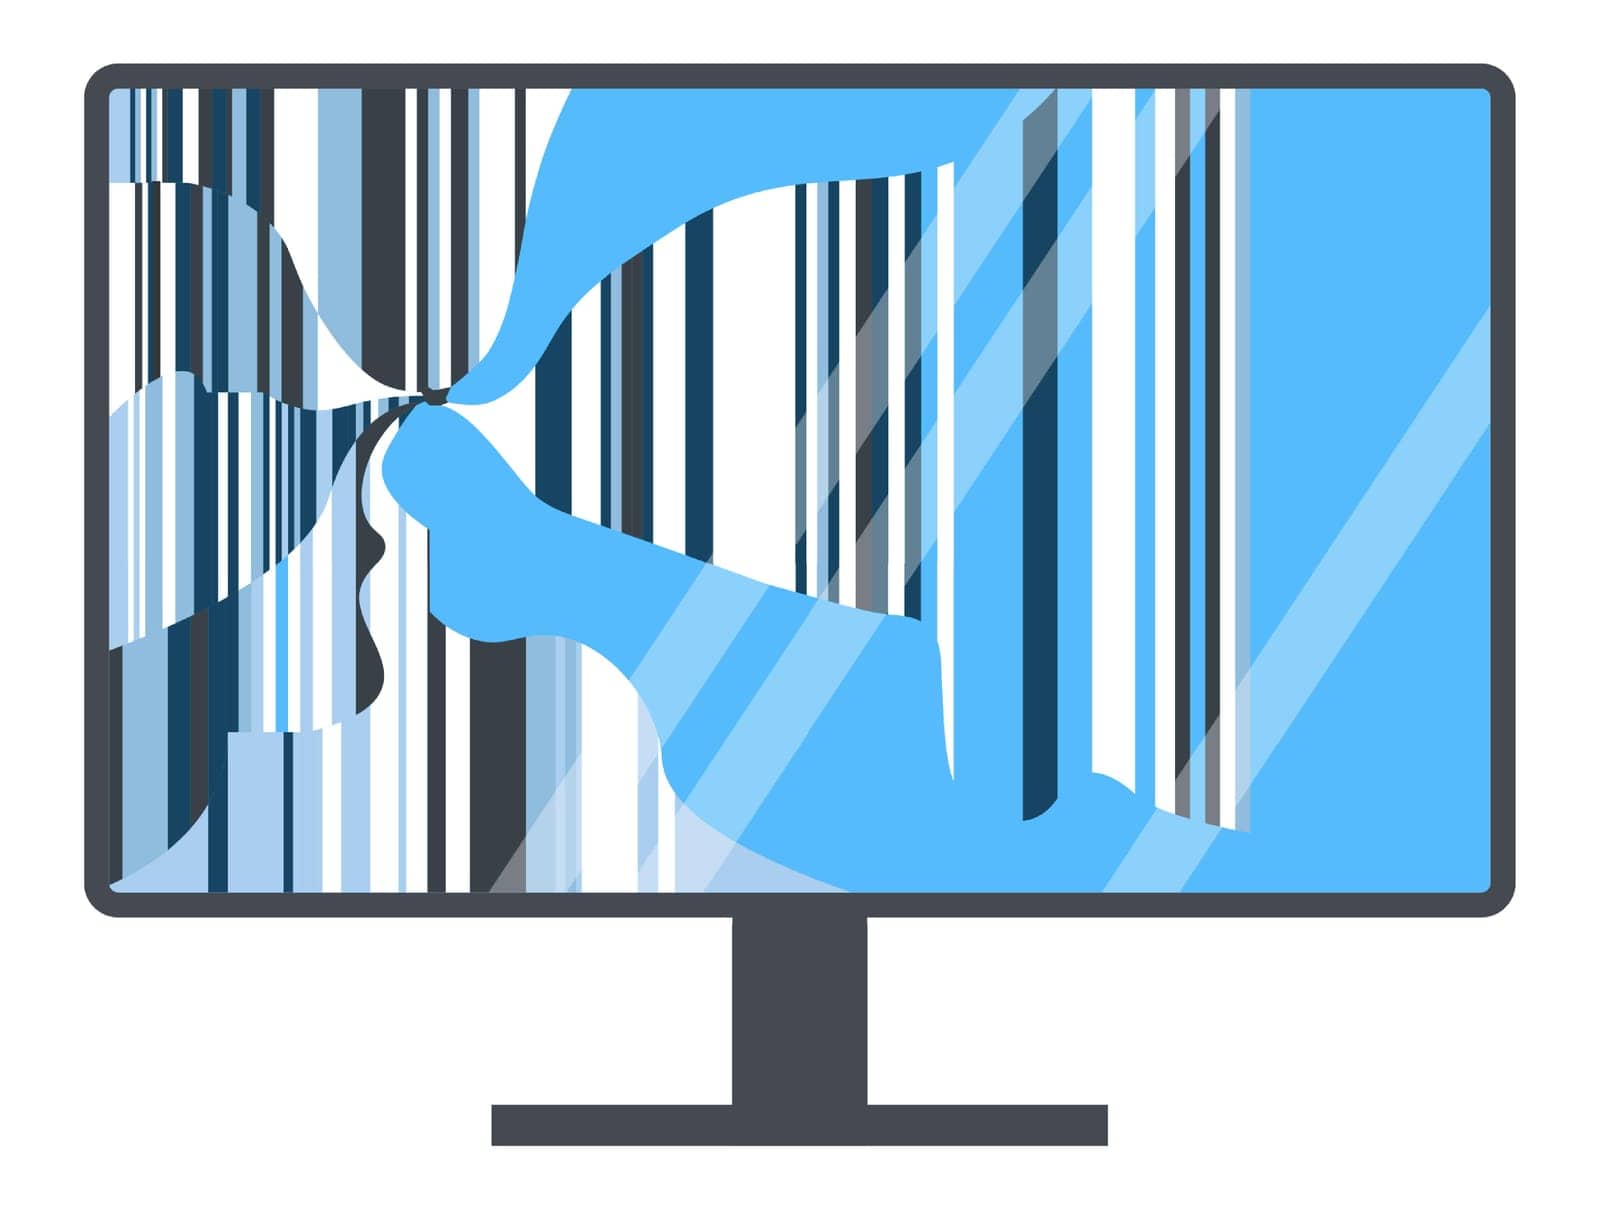 Broken screen of TV or computer monitor vector by Sonulkaster